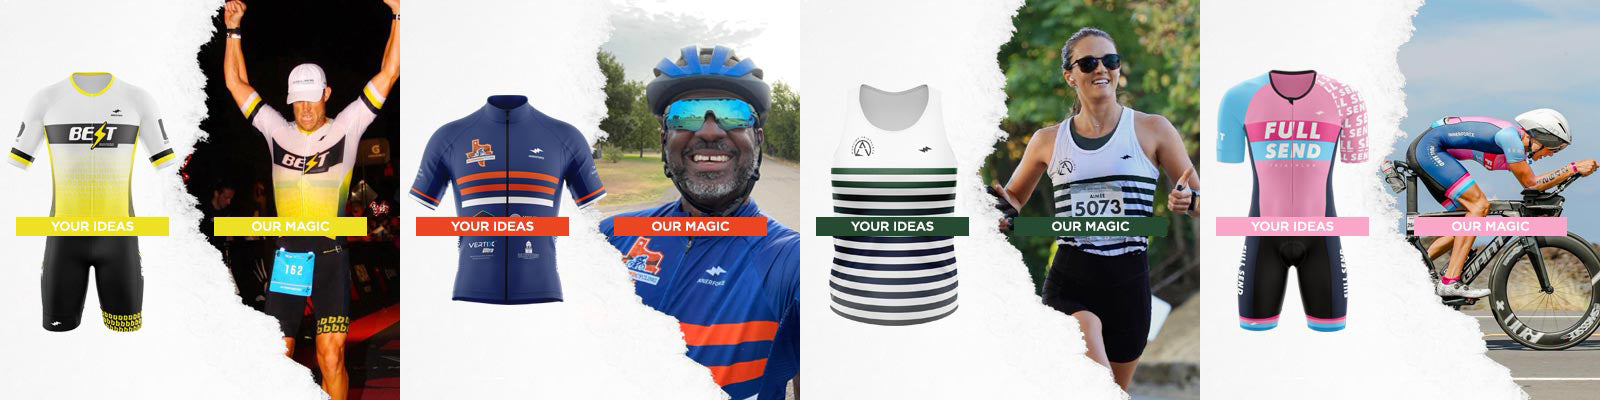 free design custom athlete apparel